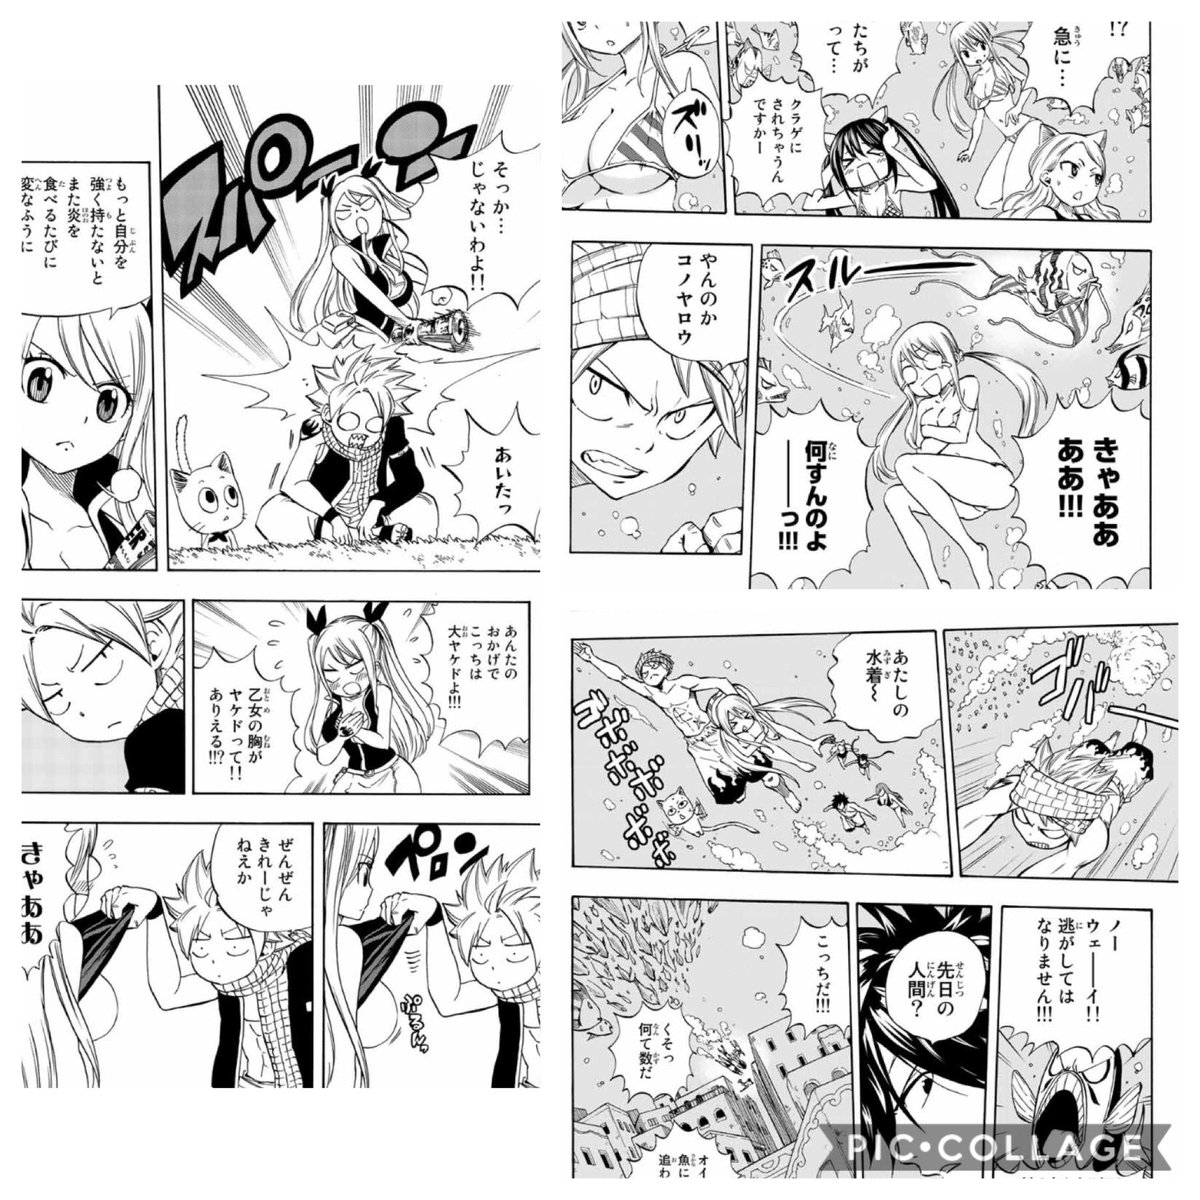 Sakura Mochico低浮上 Sakuramochi Lol さんの漫画 6作目 ツイコミ 仮